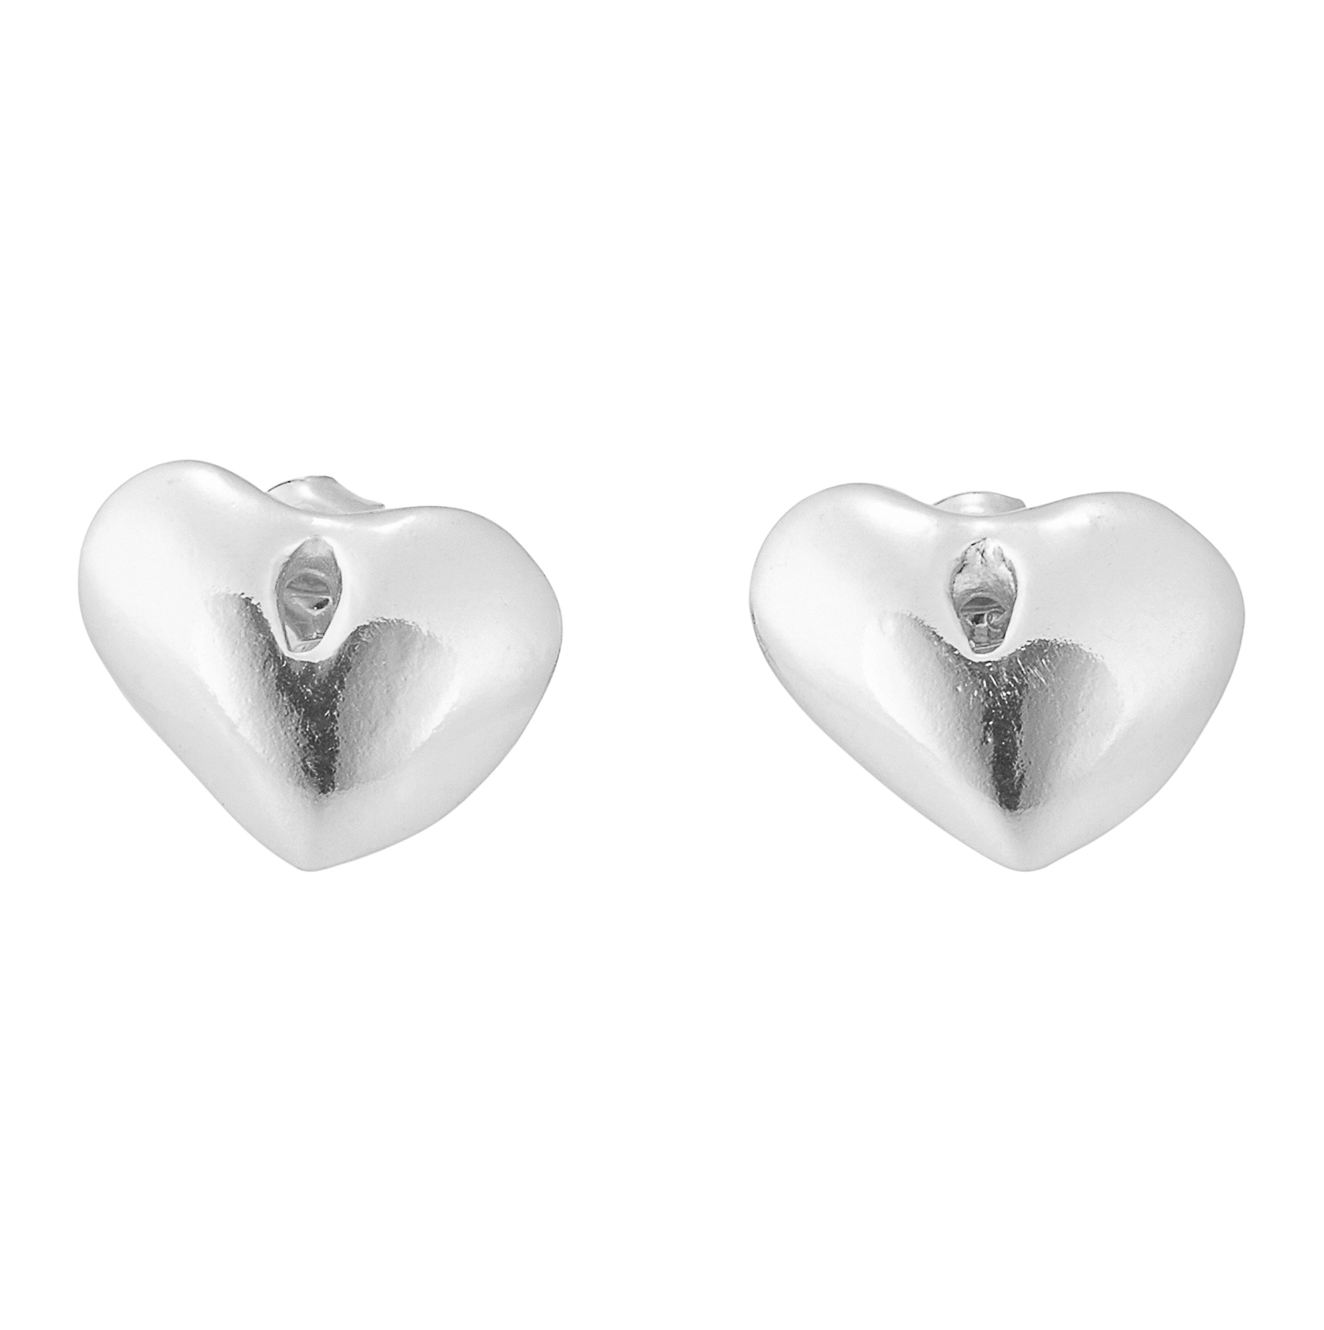 Le Coeur Silver Earrings